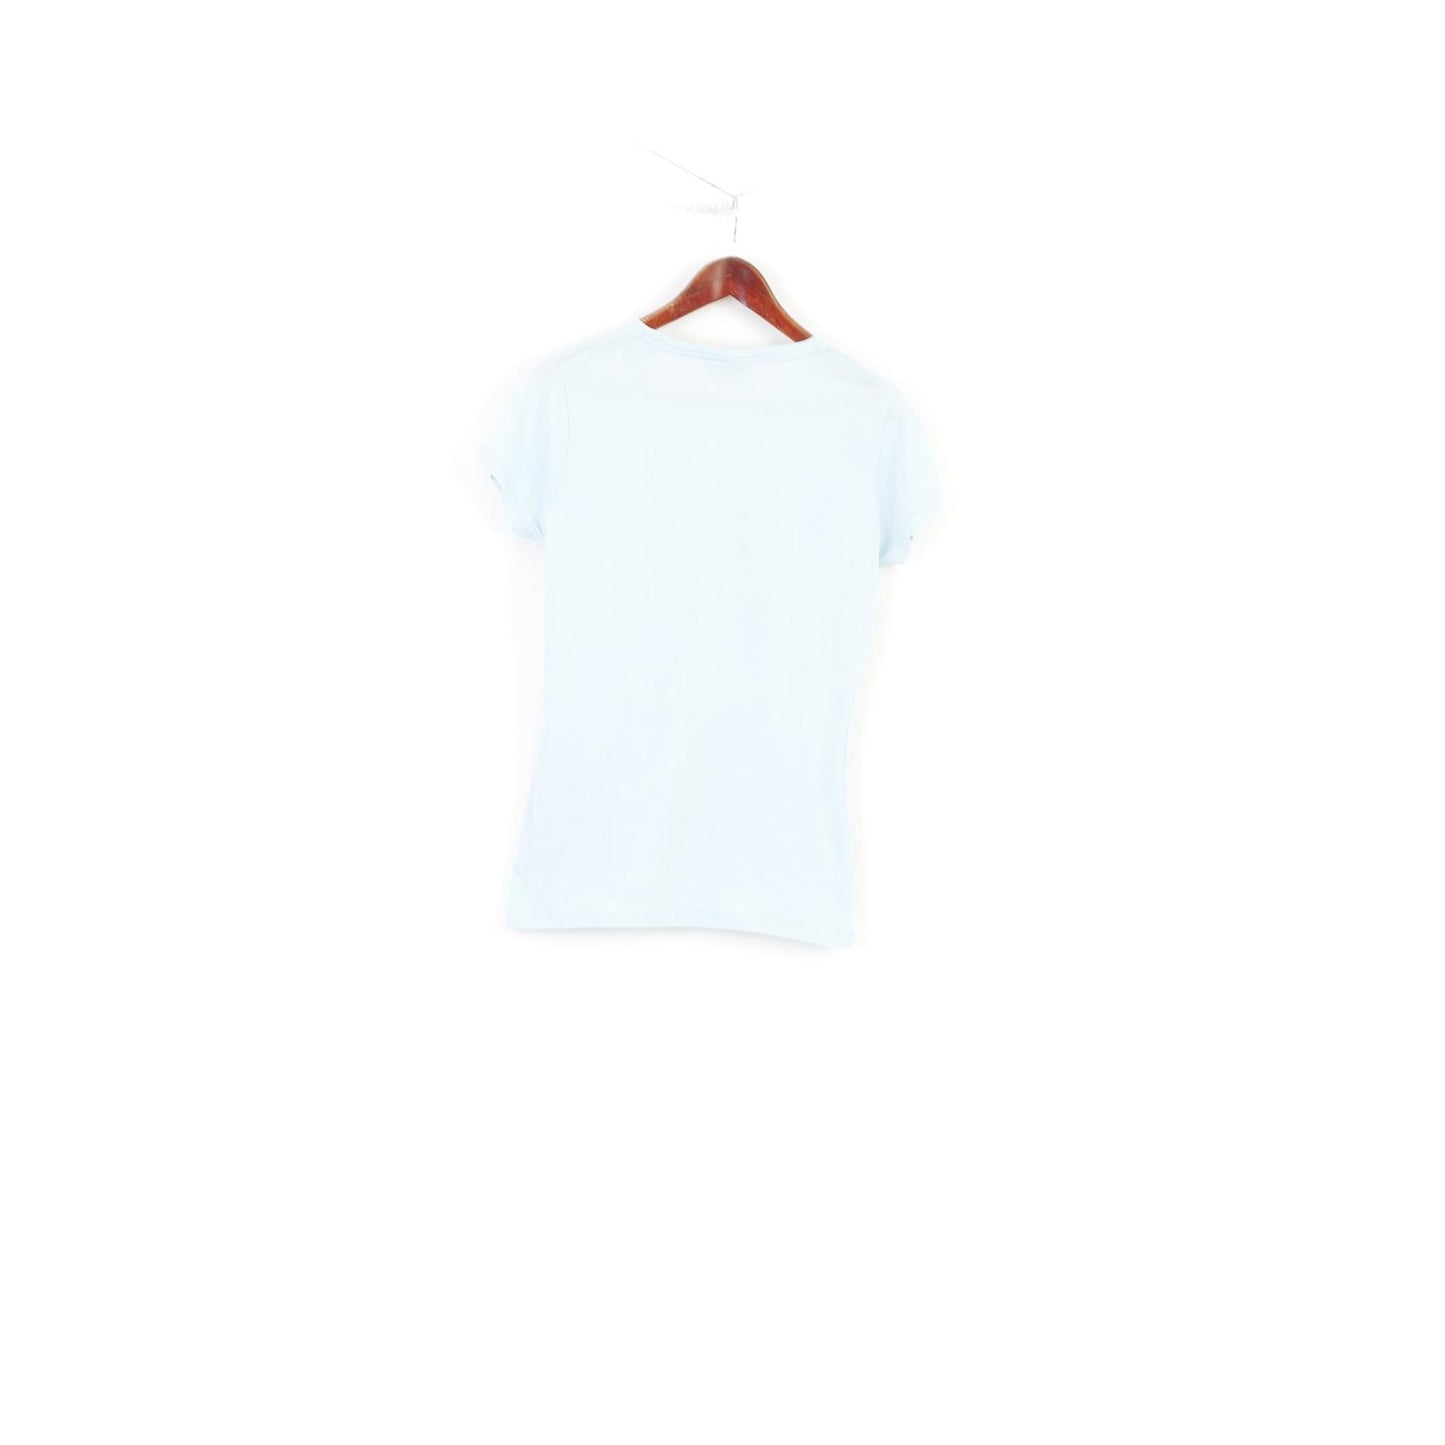 T-shirt da donna XL dei Flinstones Top in cotone girocollo con grafica blu Flinstones